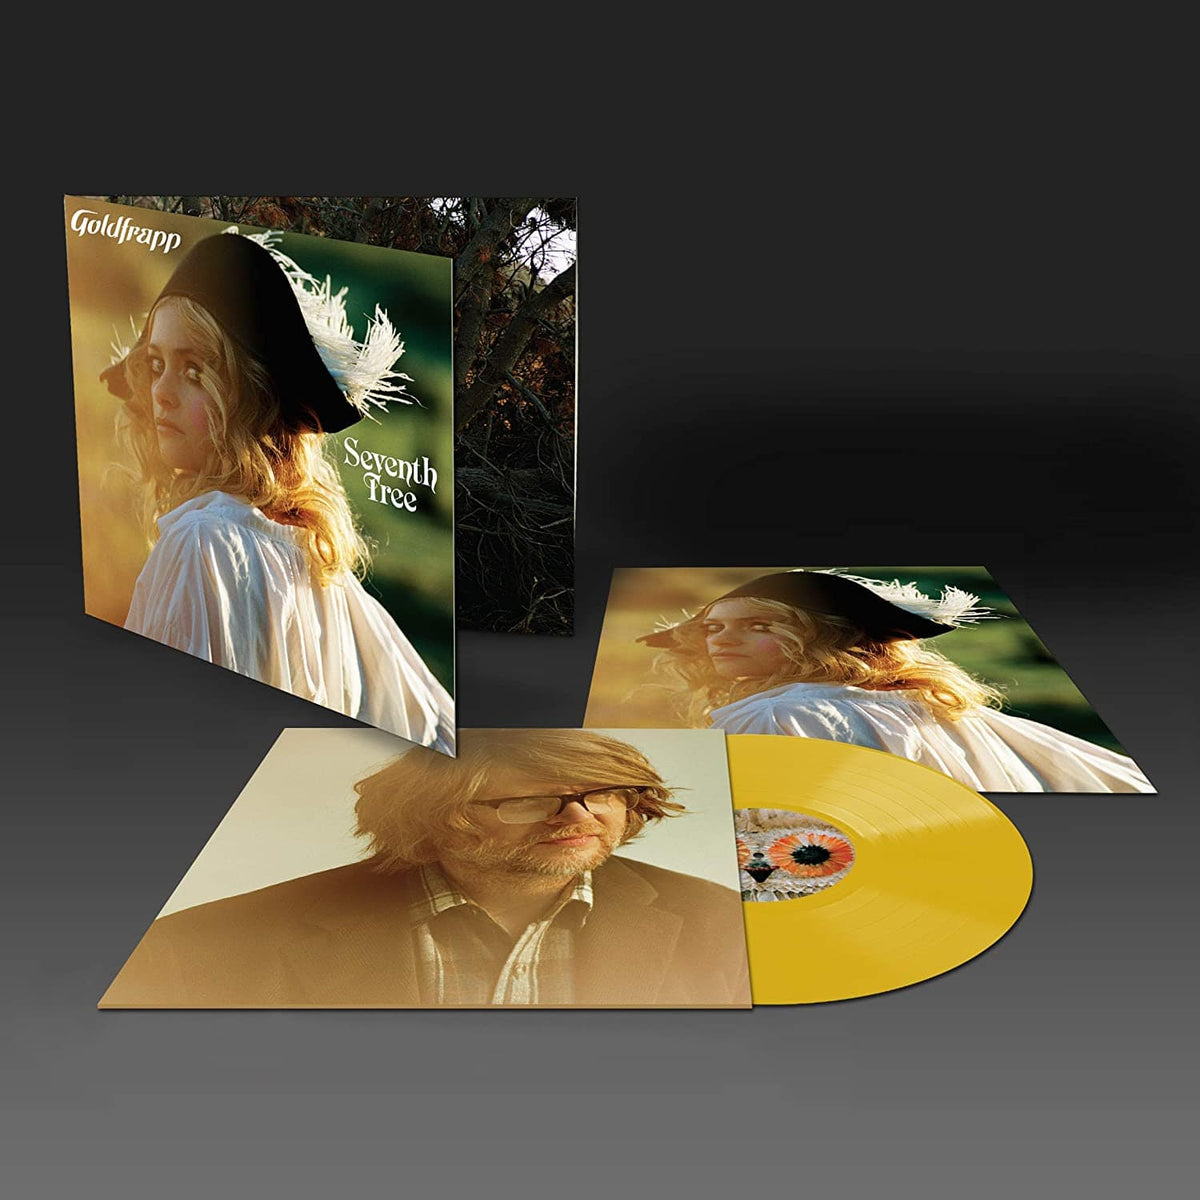 Seventh Tree - Goldfrapp [VINYL Limited Edition]